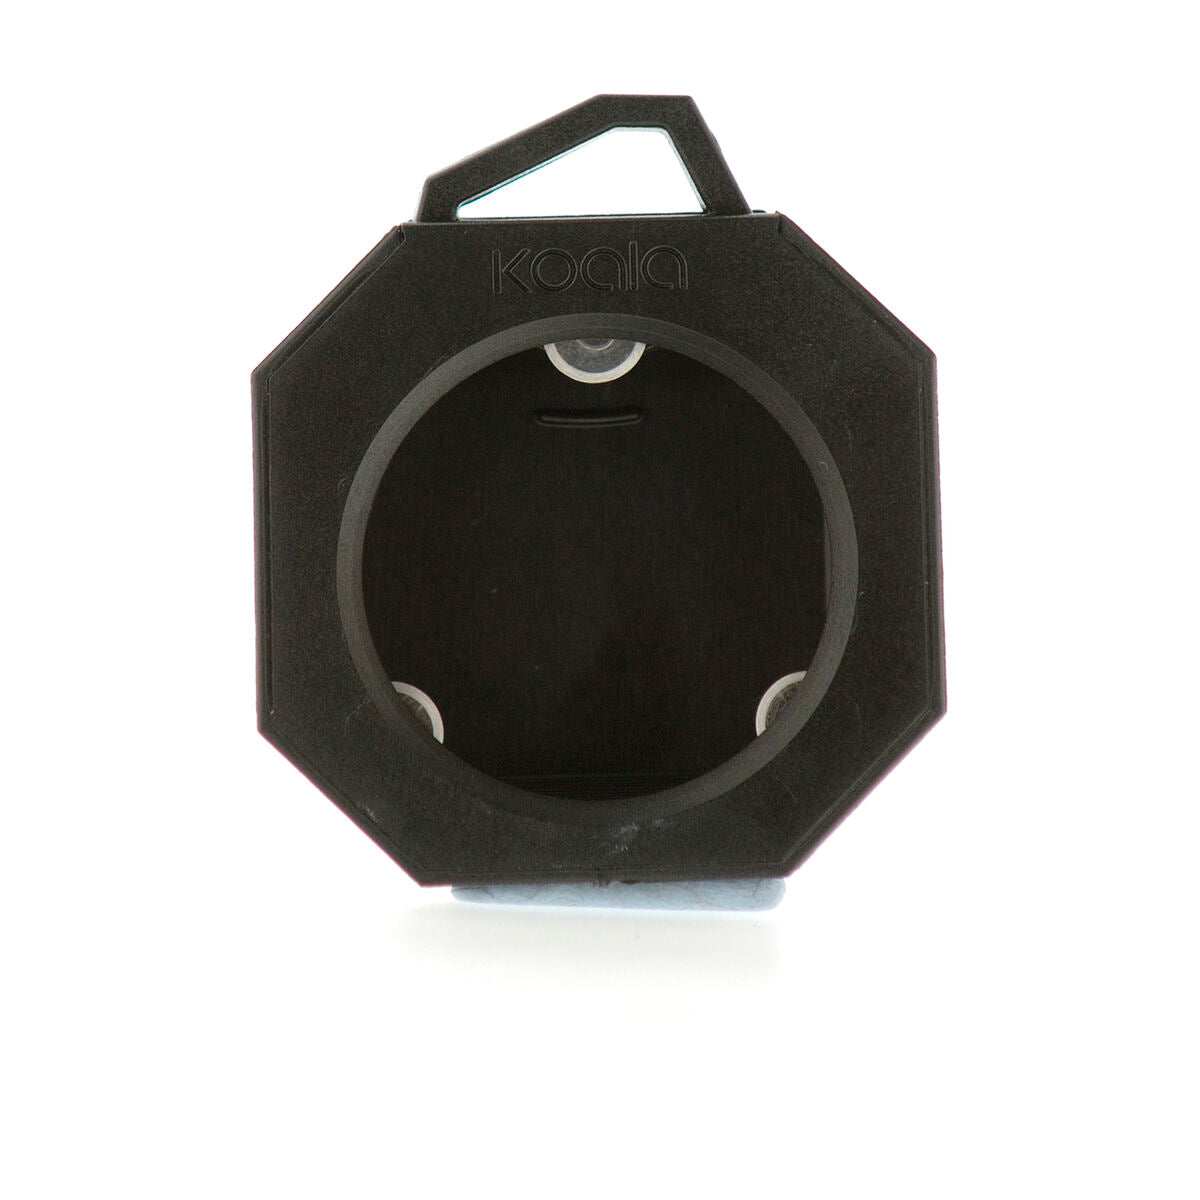 Flessencapsulesnijder Koala Basic Zwart Plastic (6 x 5,1 x 1,8 cm)